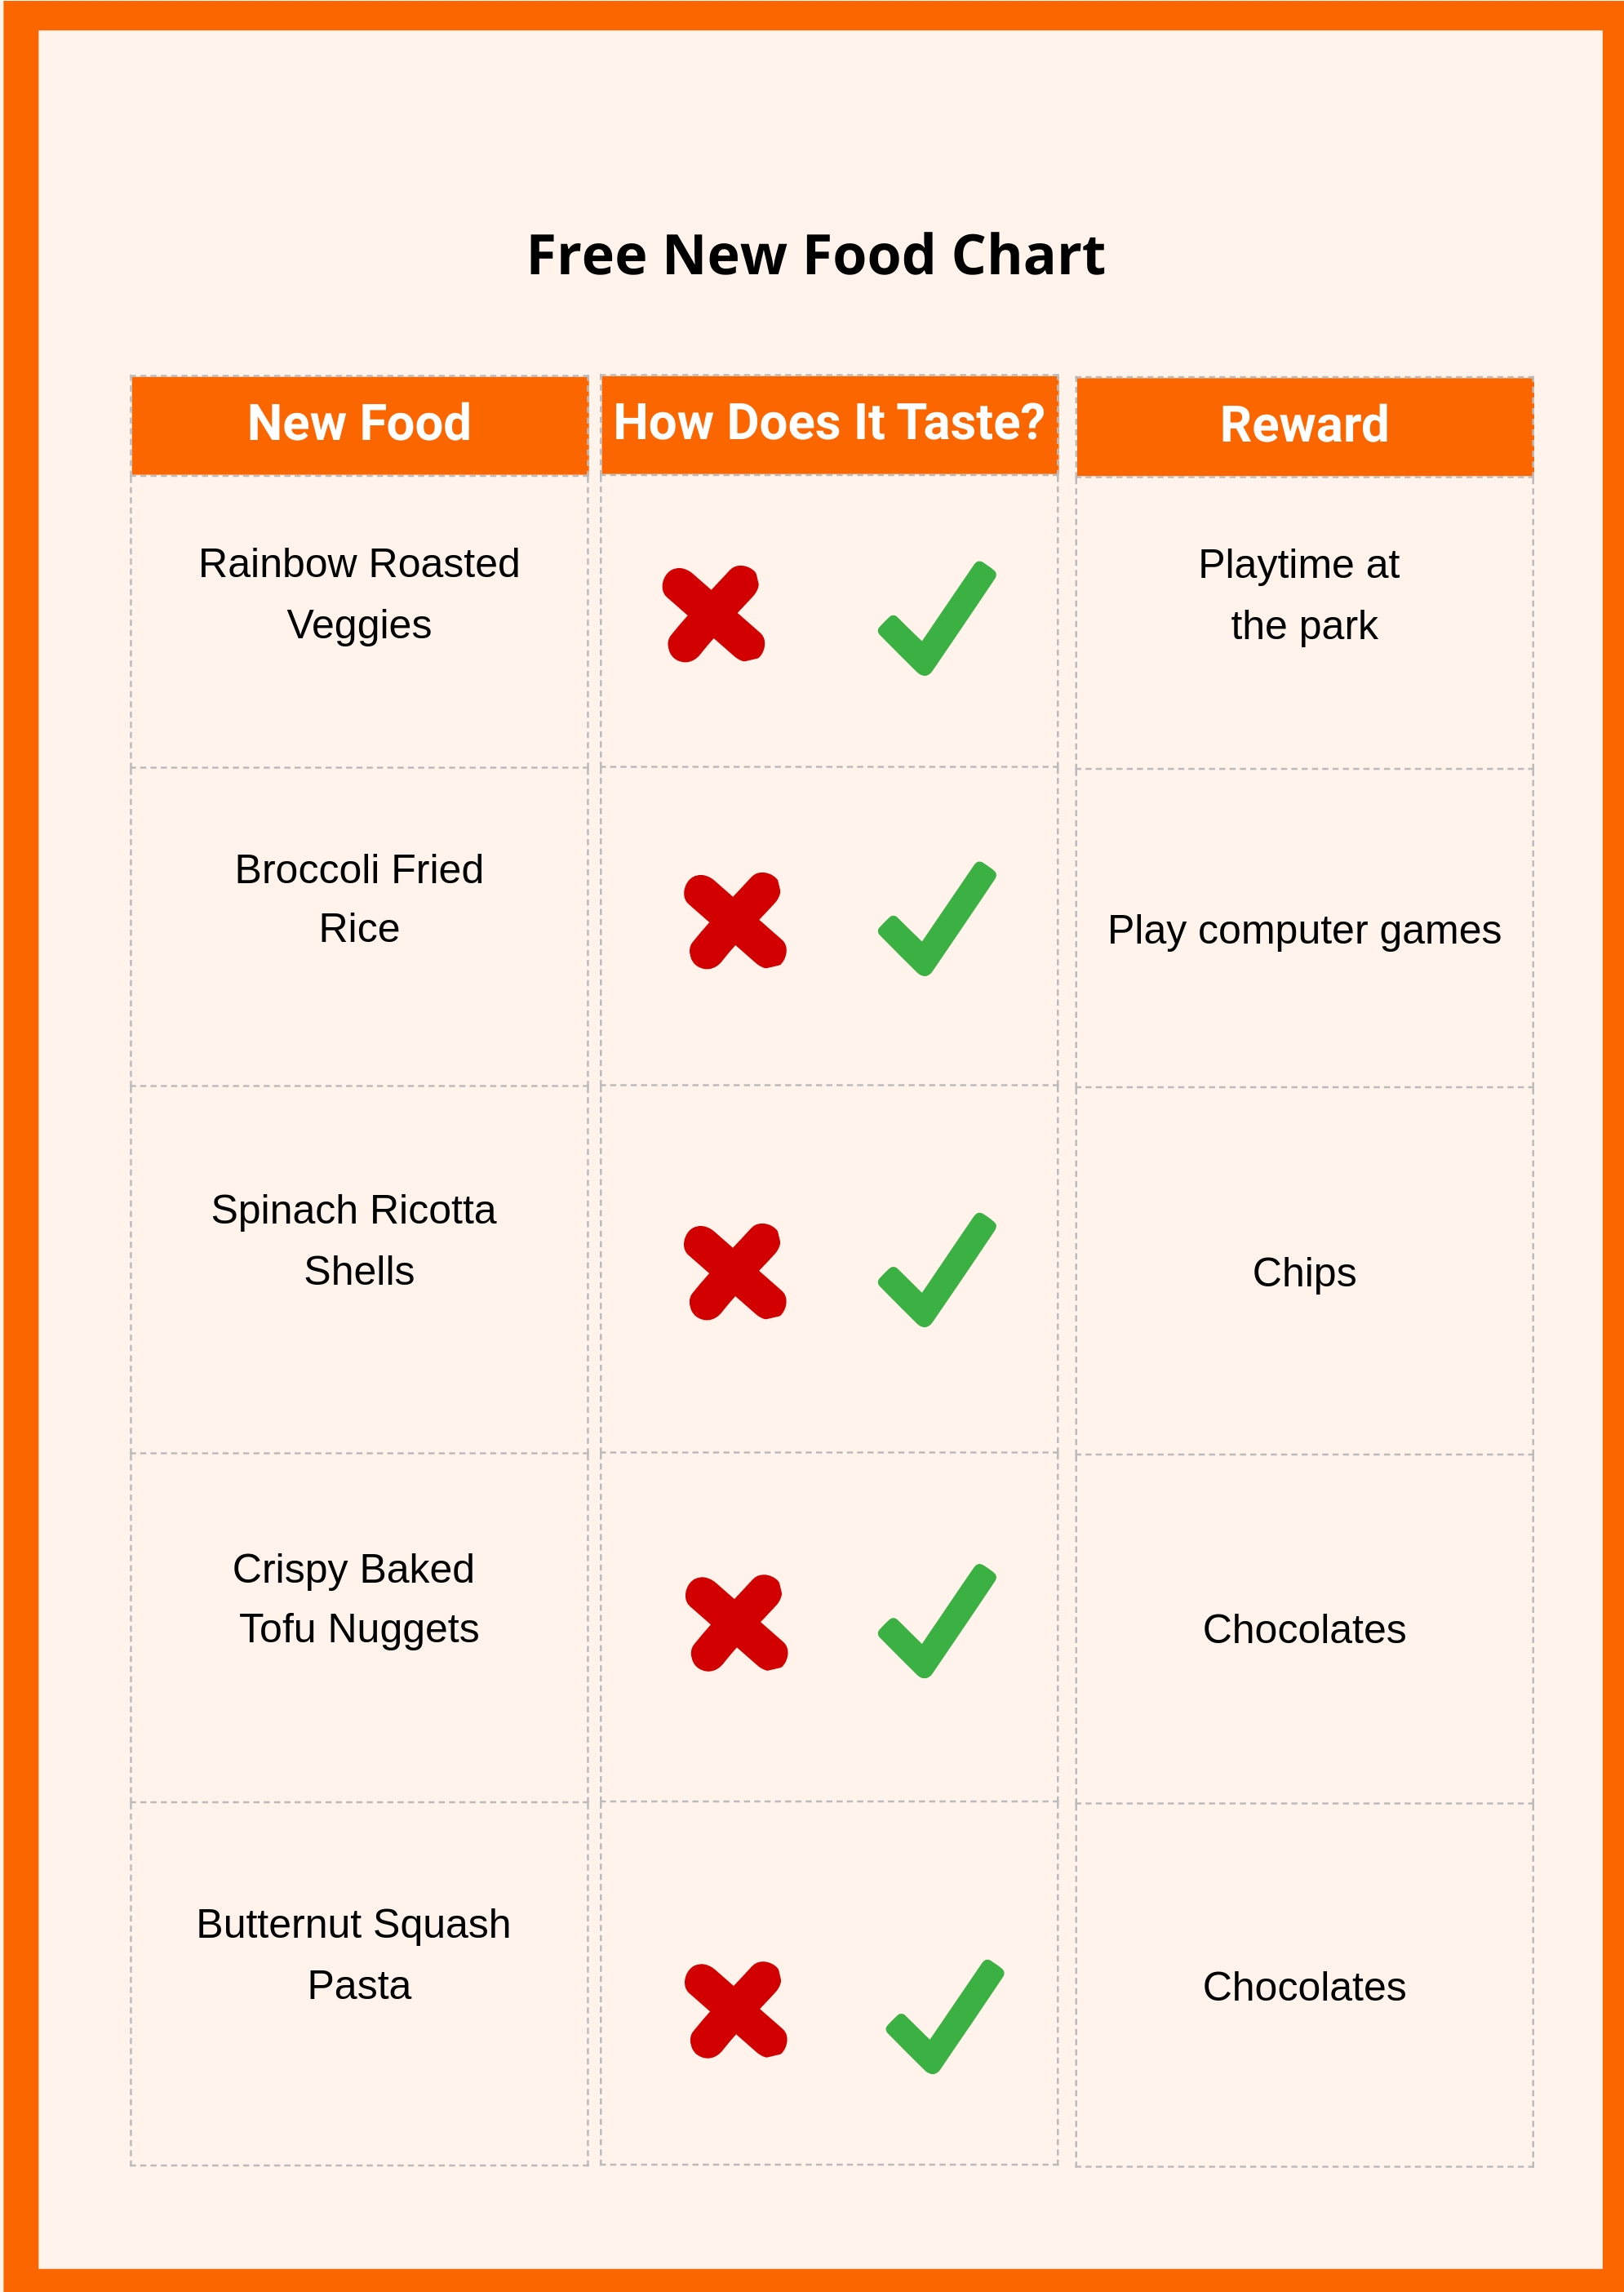 Free New Food Chart in PDF, Illustrator